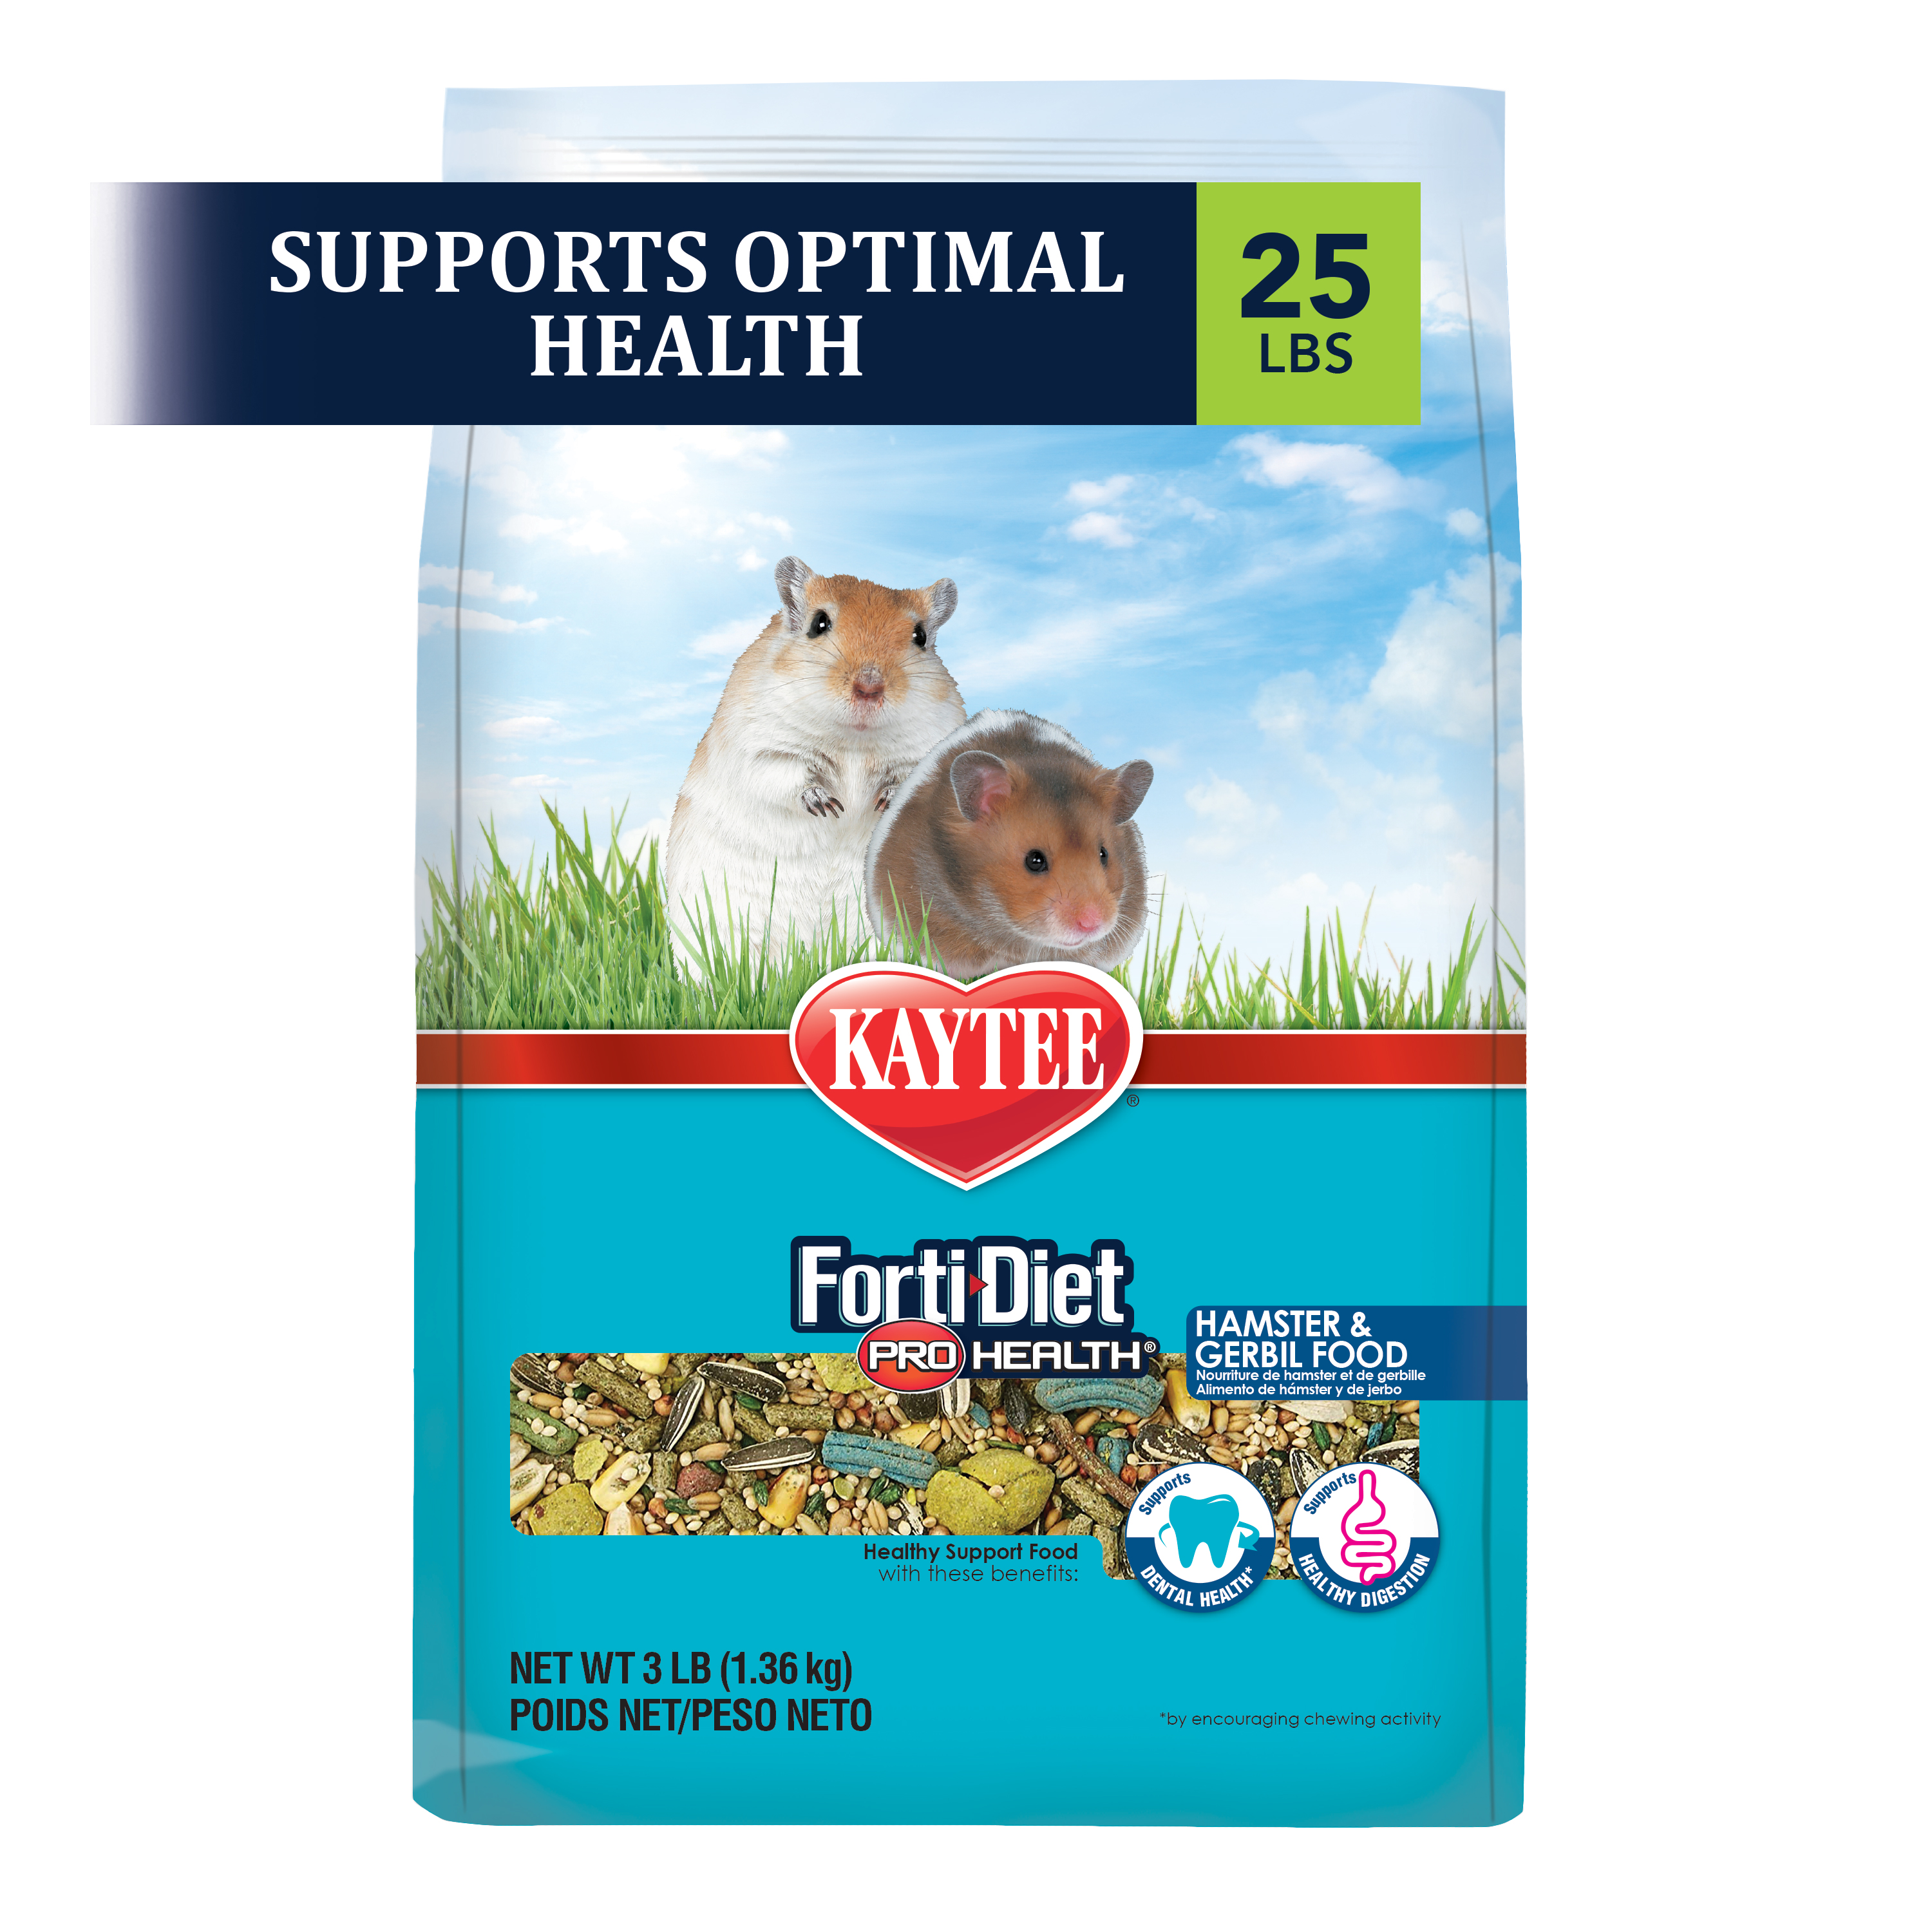 Kaytee Forti-Diet Pro Health Hamster and Gerbil Food 25lb - image 1 of 8